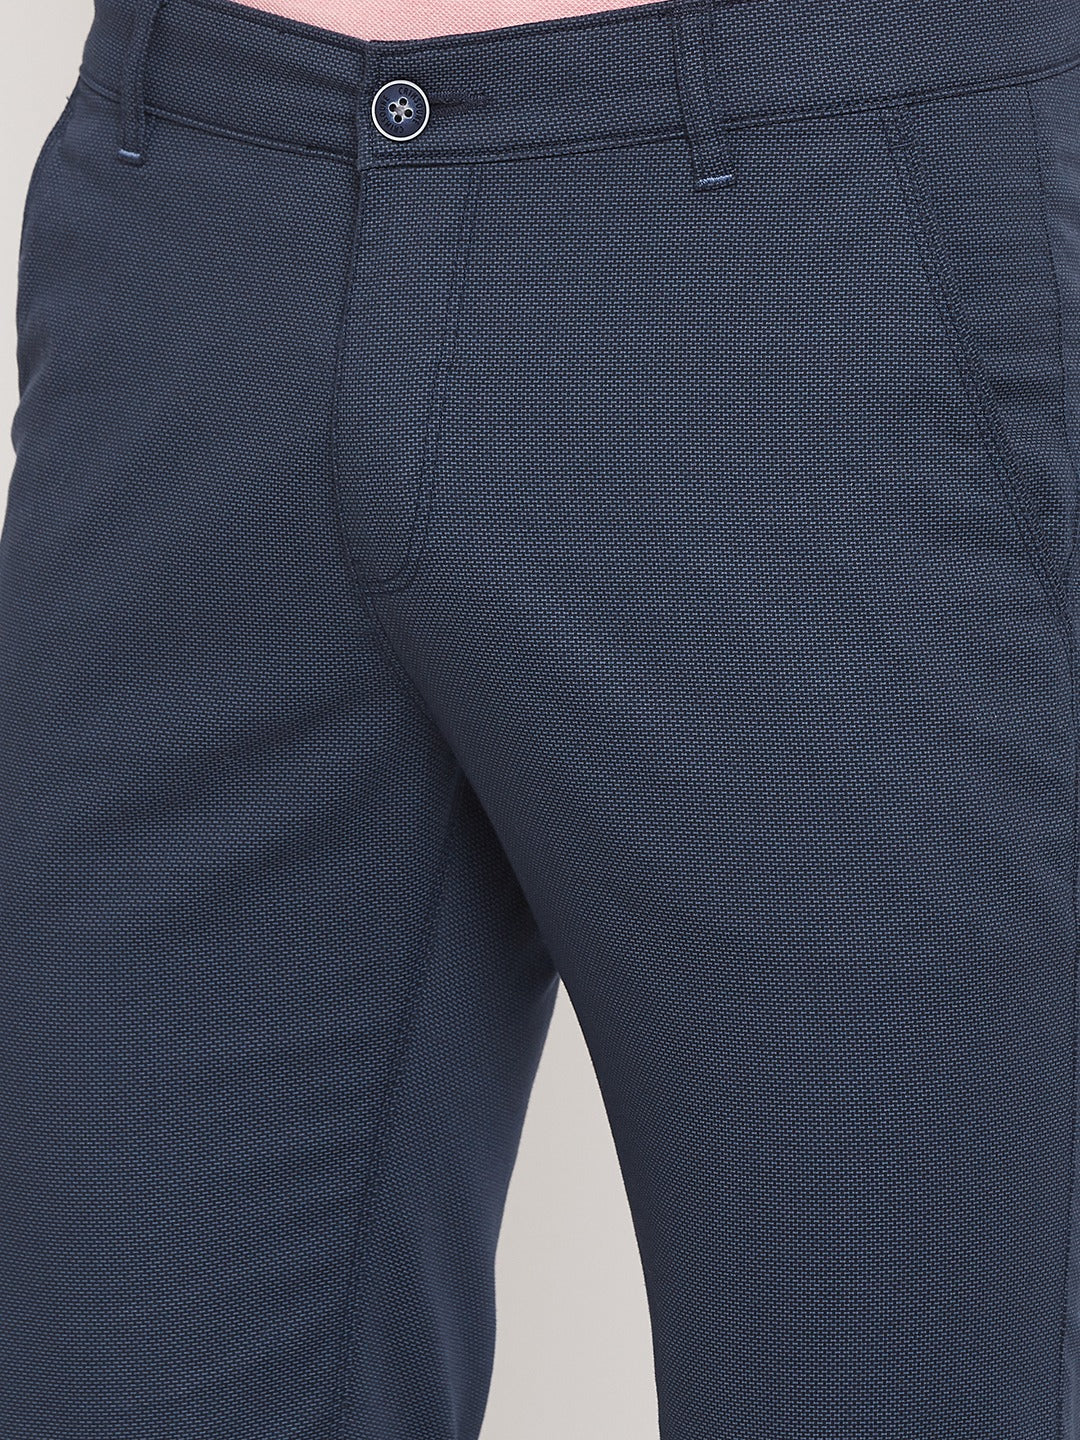 Navy Blue Slim Fit Trousers - Men Trousers